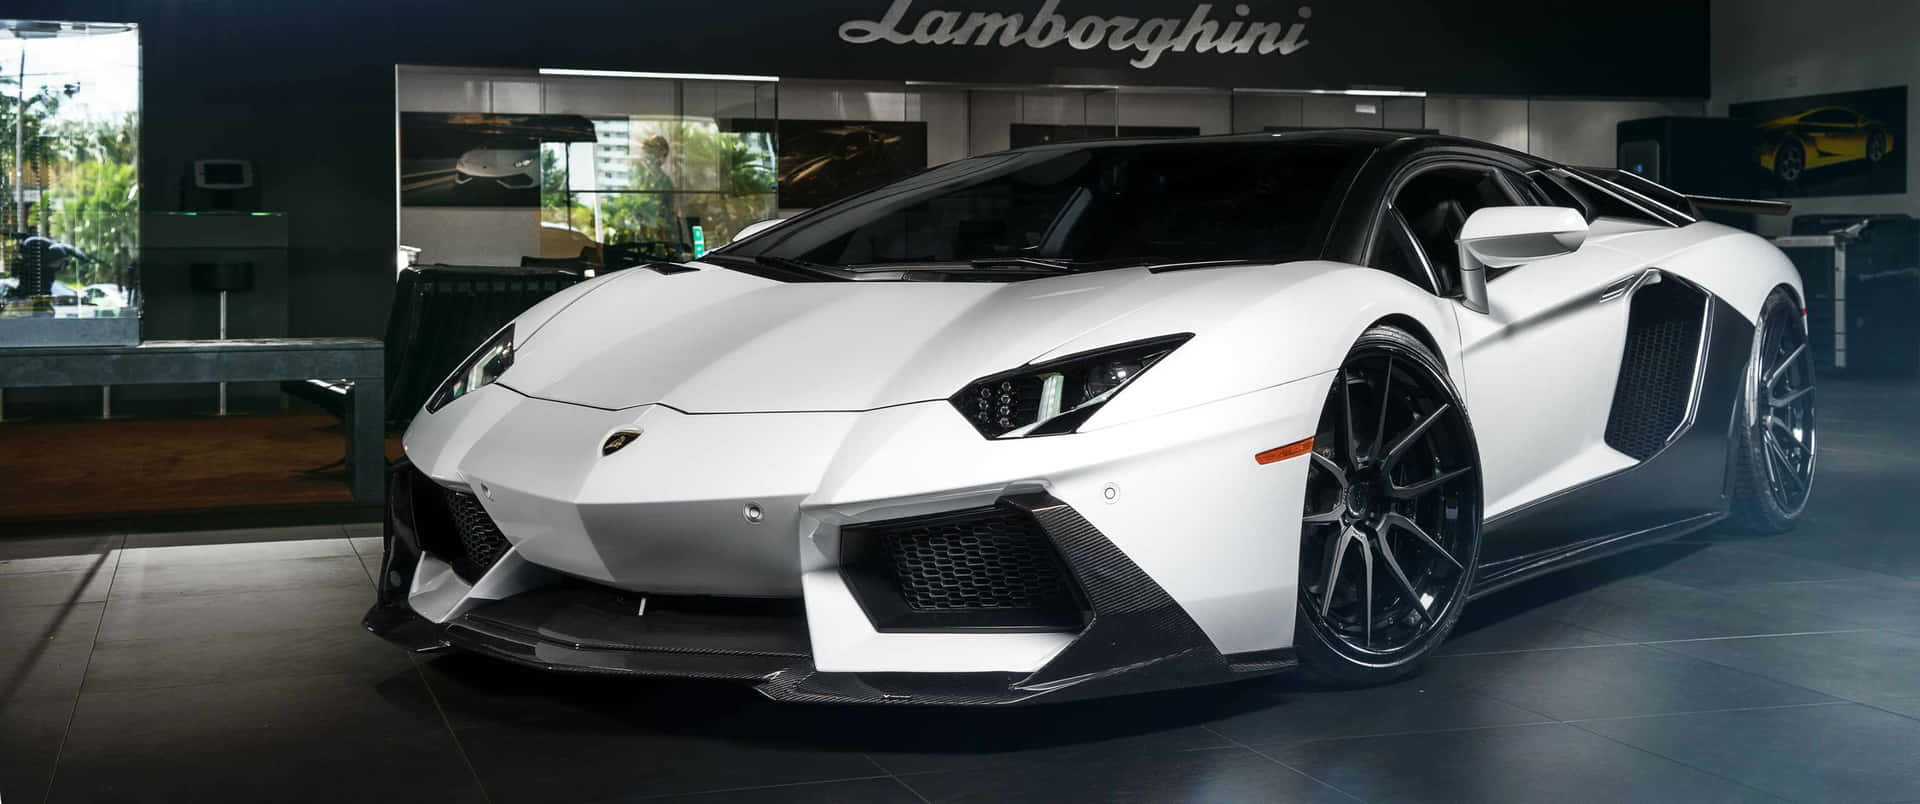 The ultra-sleek design of the Lamborghini creates an unforgettable shape.